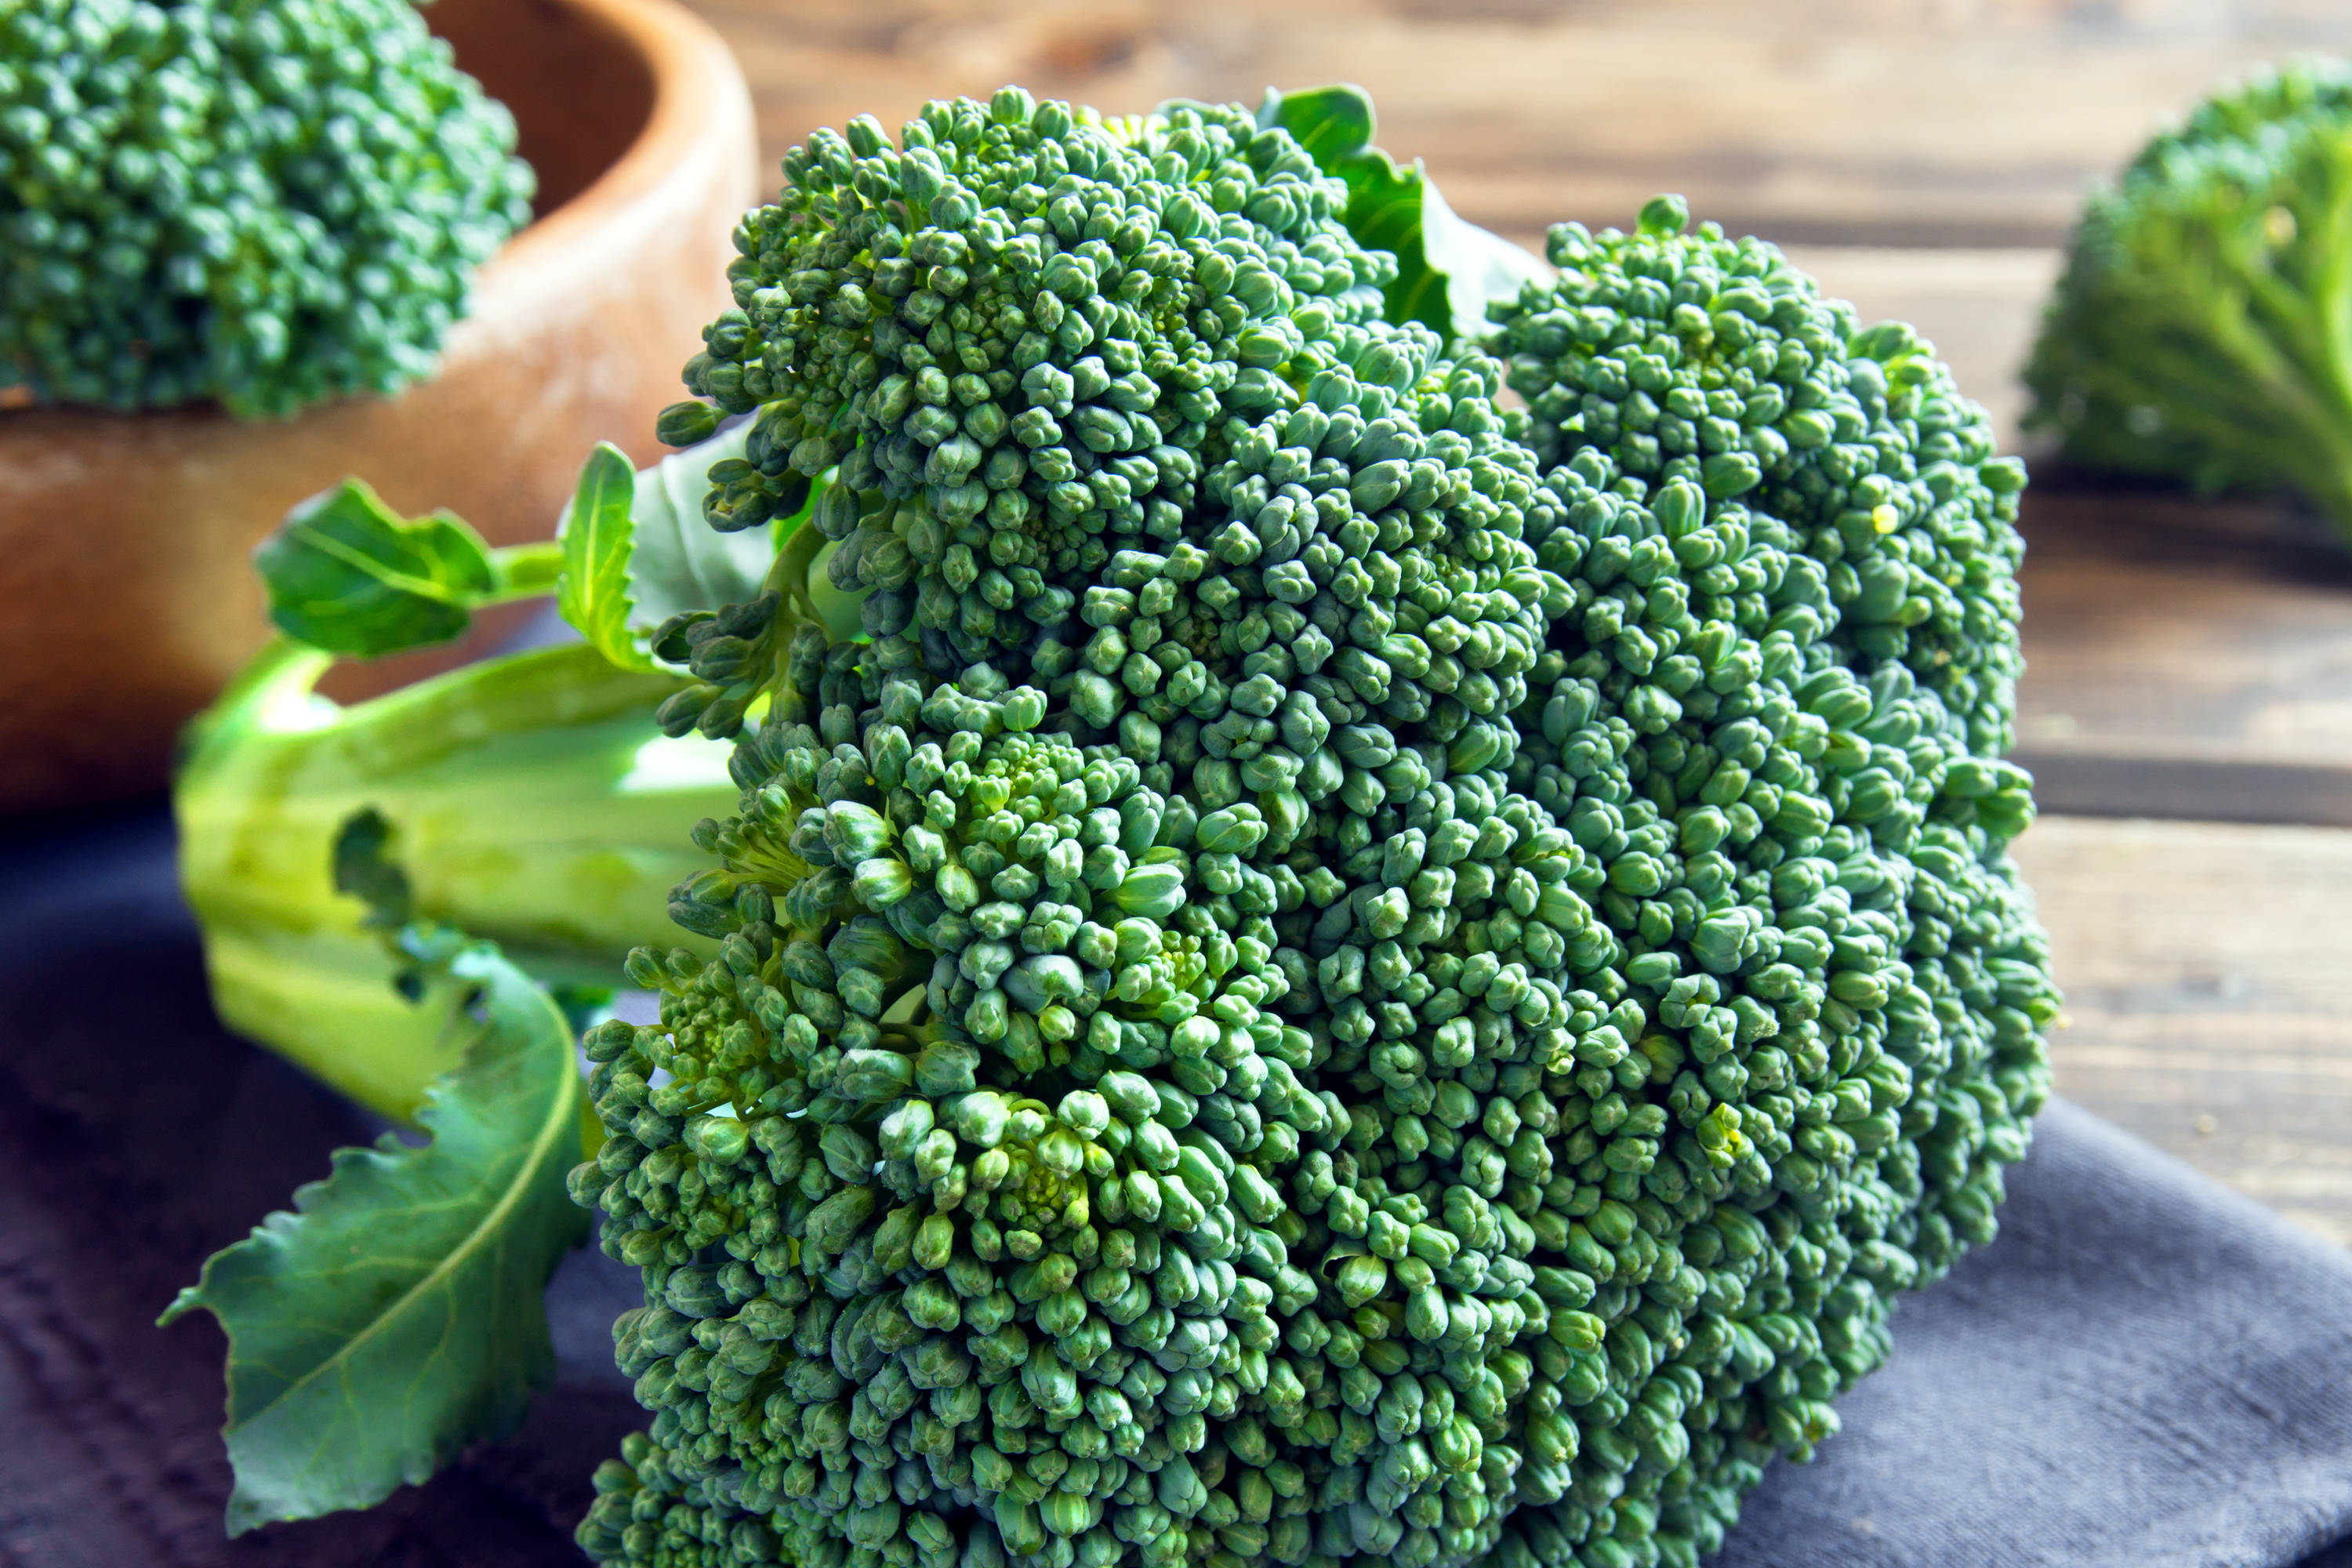 Broccoli florets. Photo: Mizina / iStock.